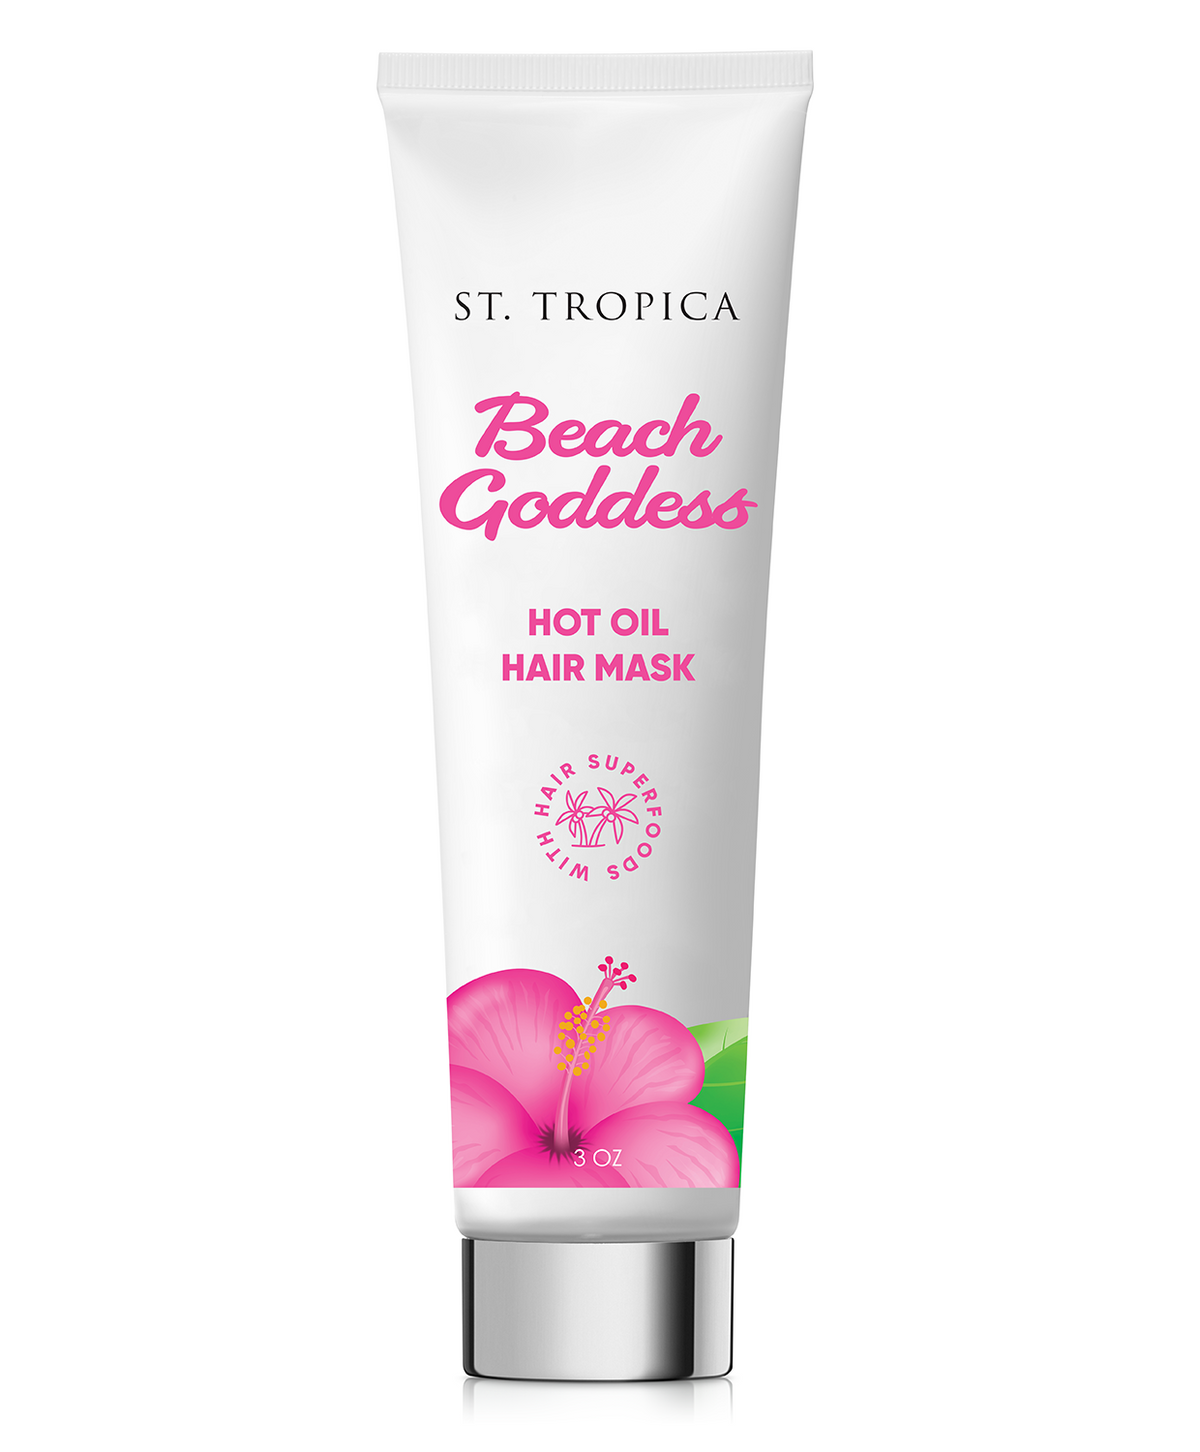 Beach Goddess Hot Oil Hair Mask - ST. TROPICA